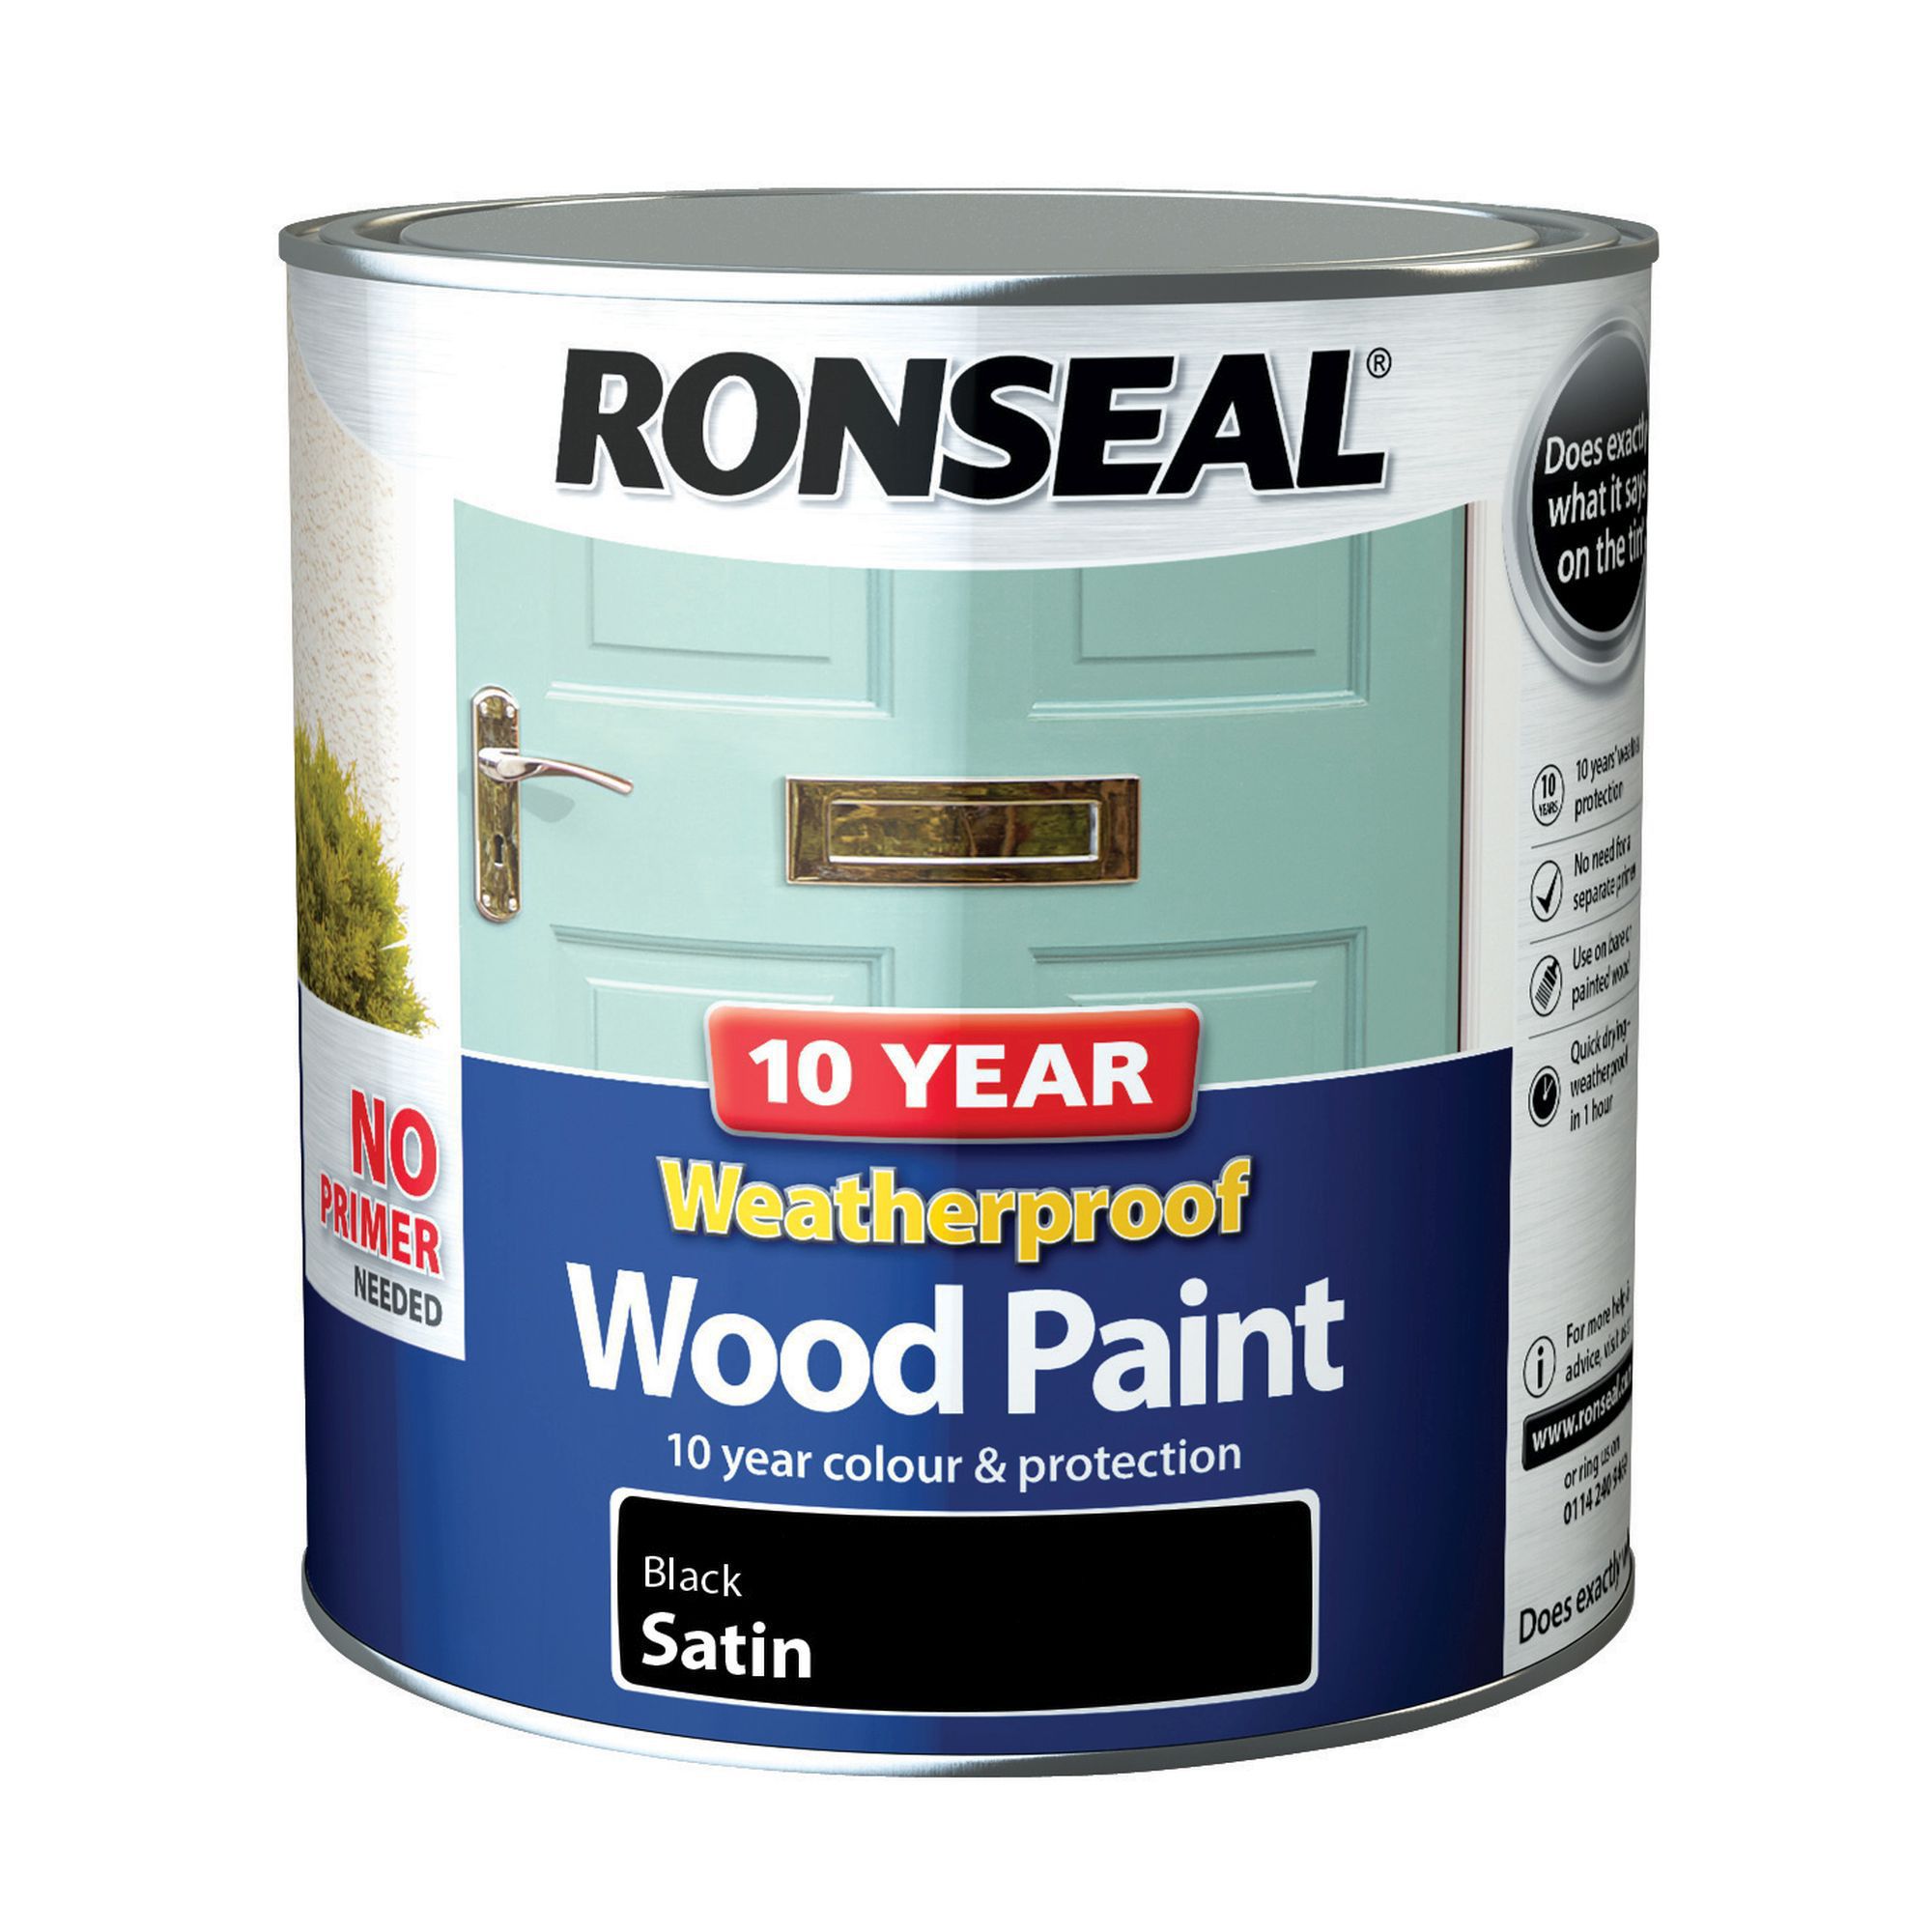 Ronseal 10 Year Weatherproof Wood Paint Black Satin Exterior Wood paint, 2.5L Tin